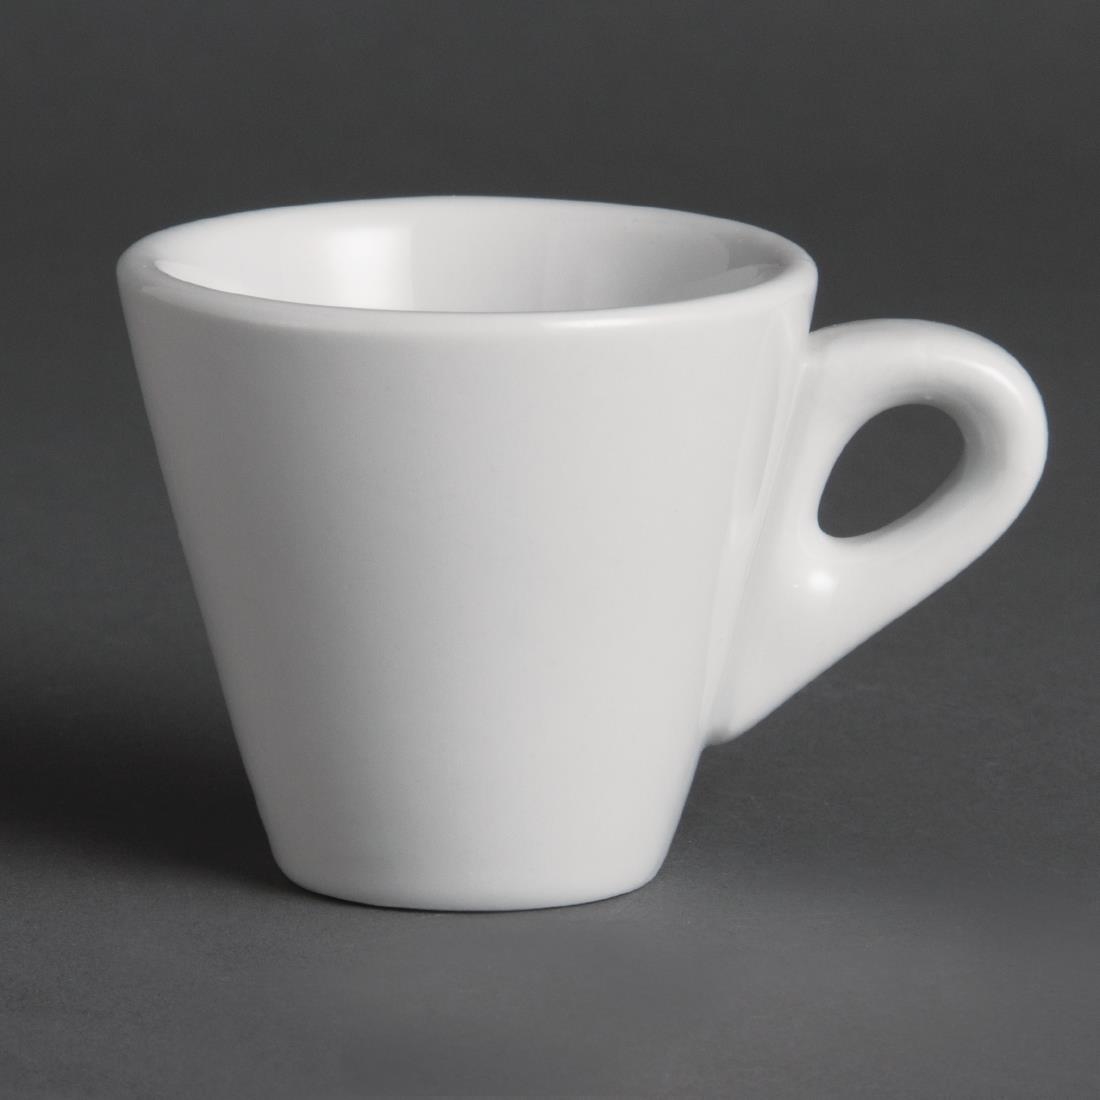 Conical Espresso Cup